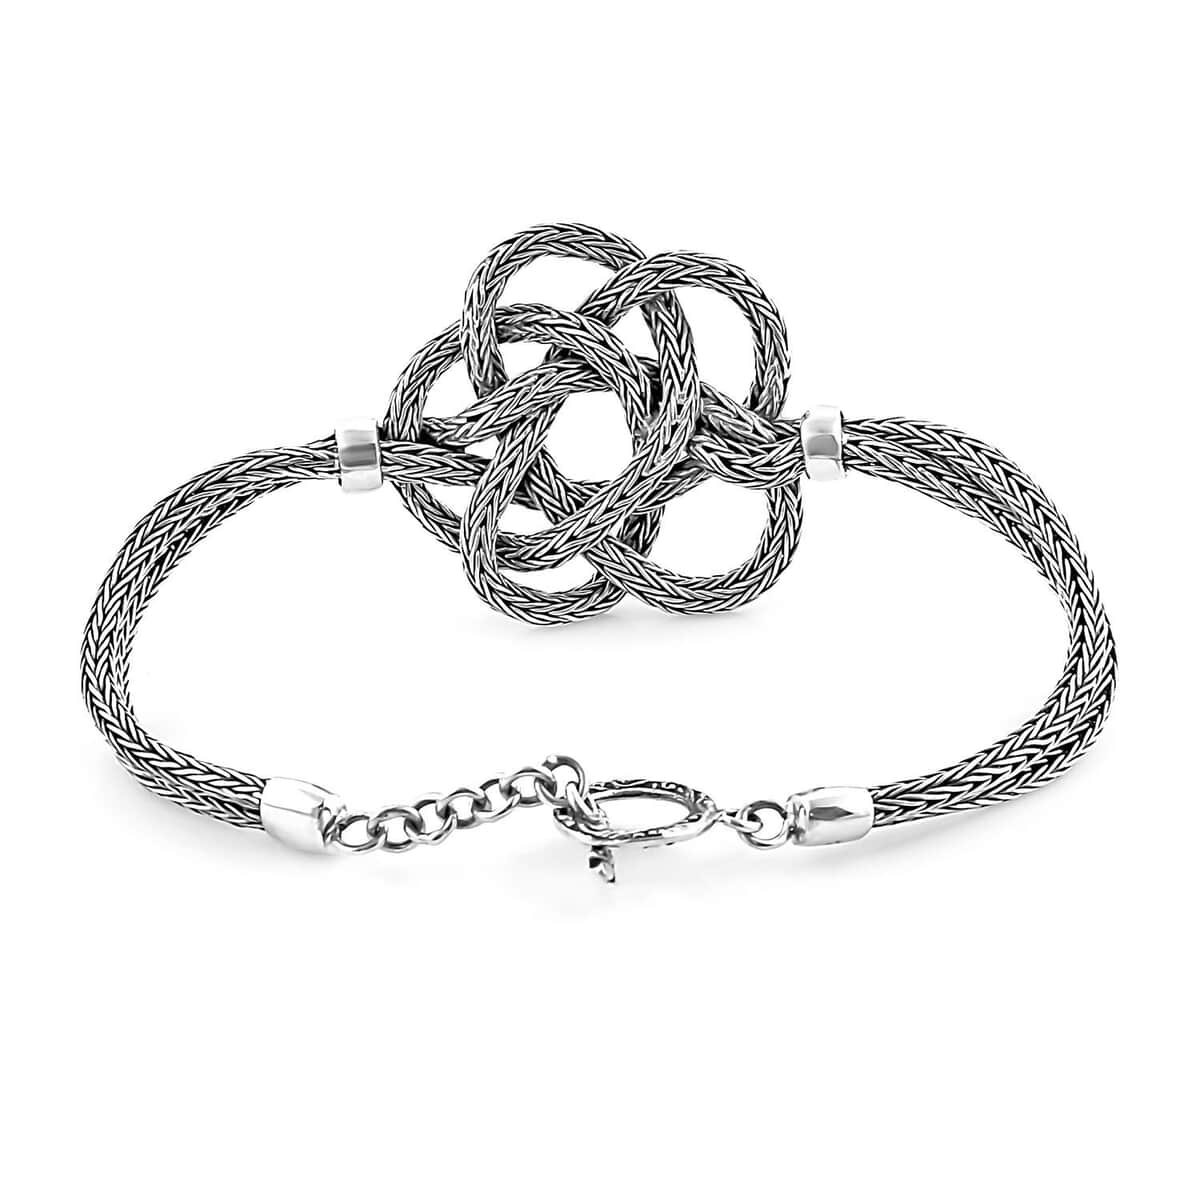 Bali Legacy Sterling Silver Tulang Naga Knot Bracelet (7.25 In) 17.65 Grams image number 3